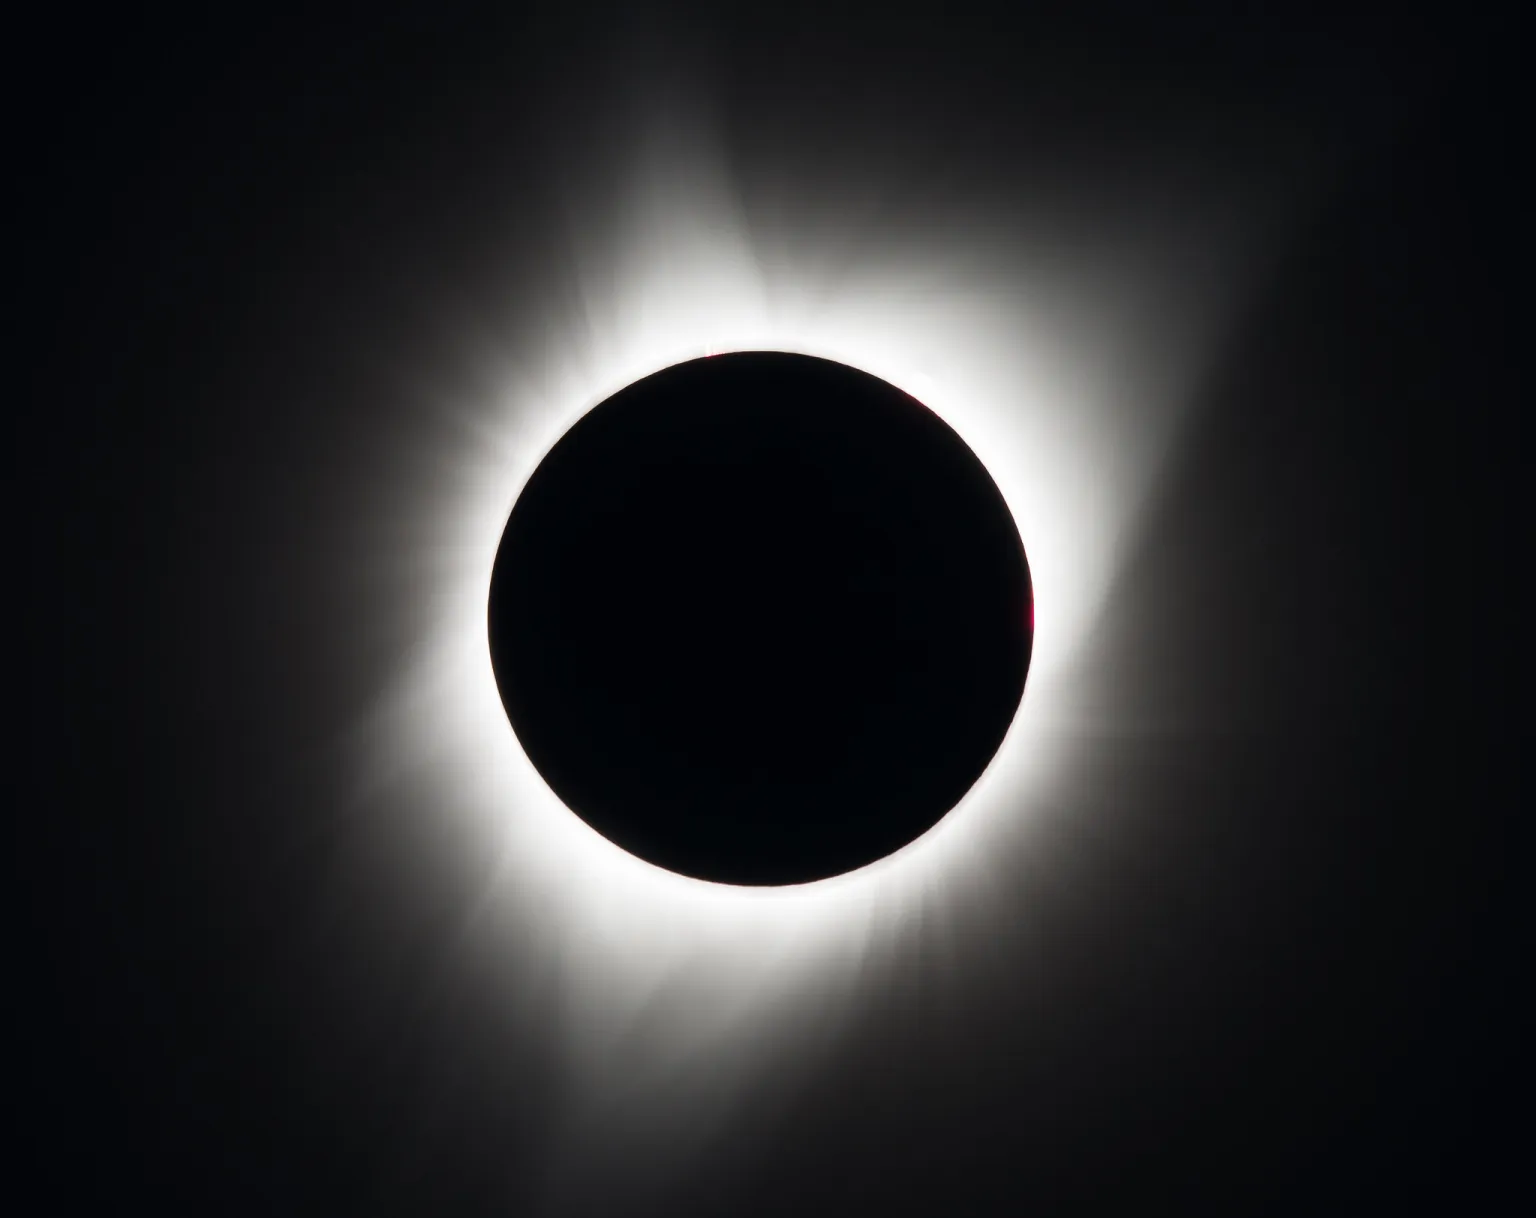 solar eclipse 2024 सूर्य ग्रहण 2024